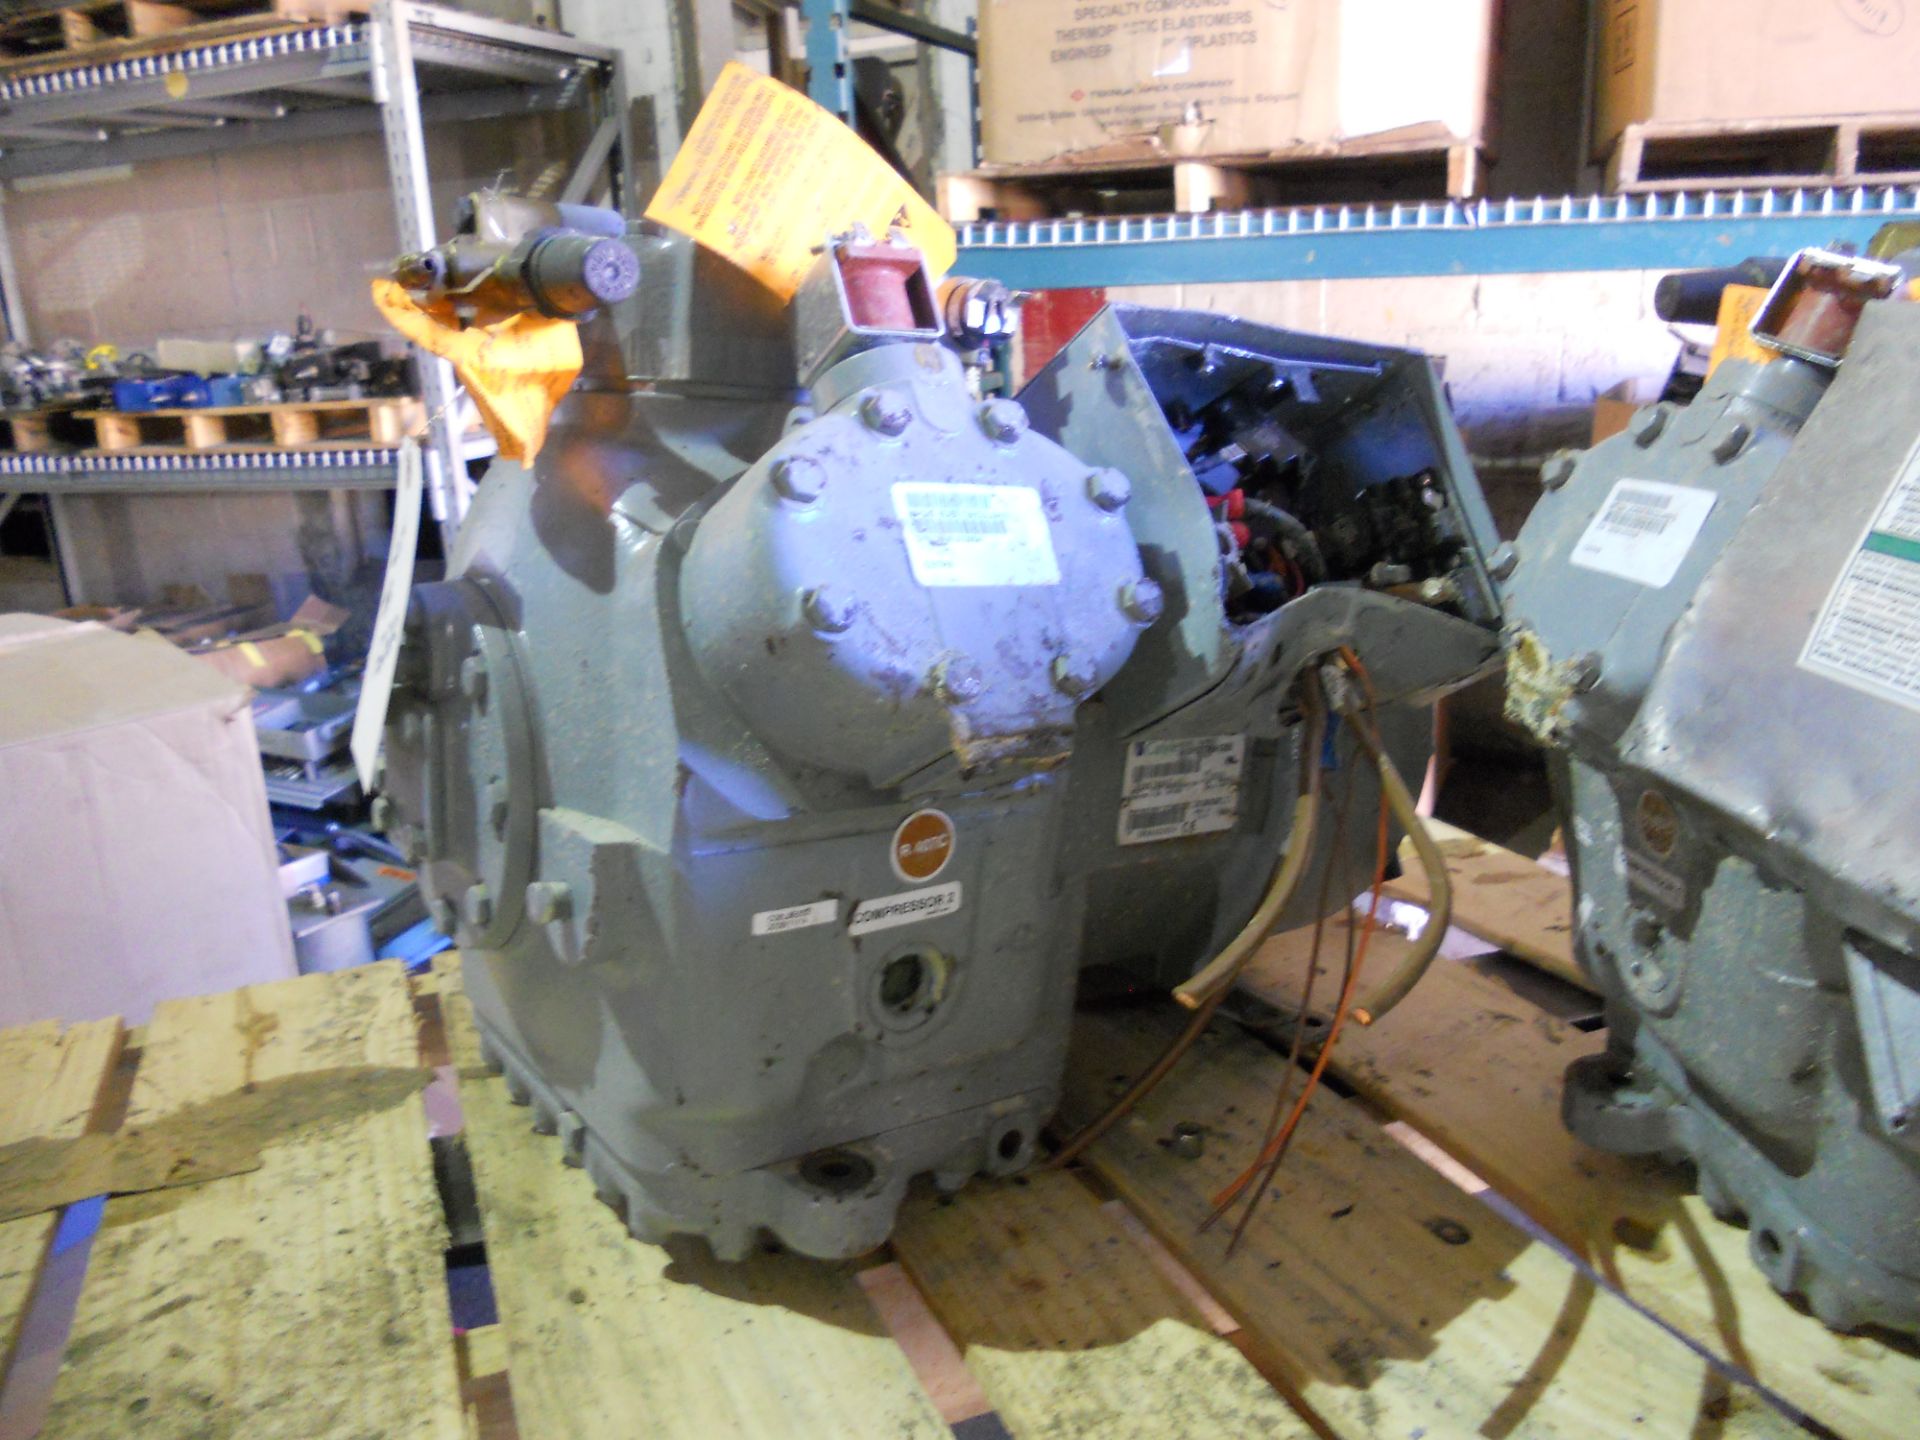 Carlyle Compressor M# 06DF5372BA1260 - Image 2 of 3